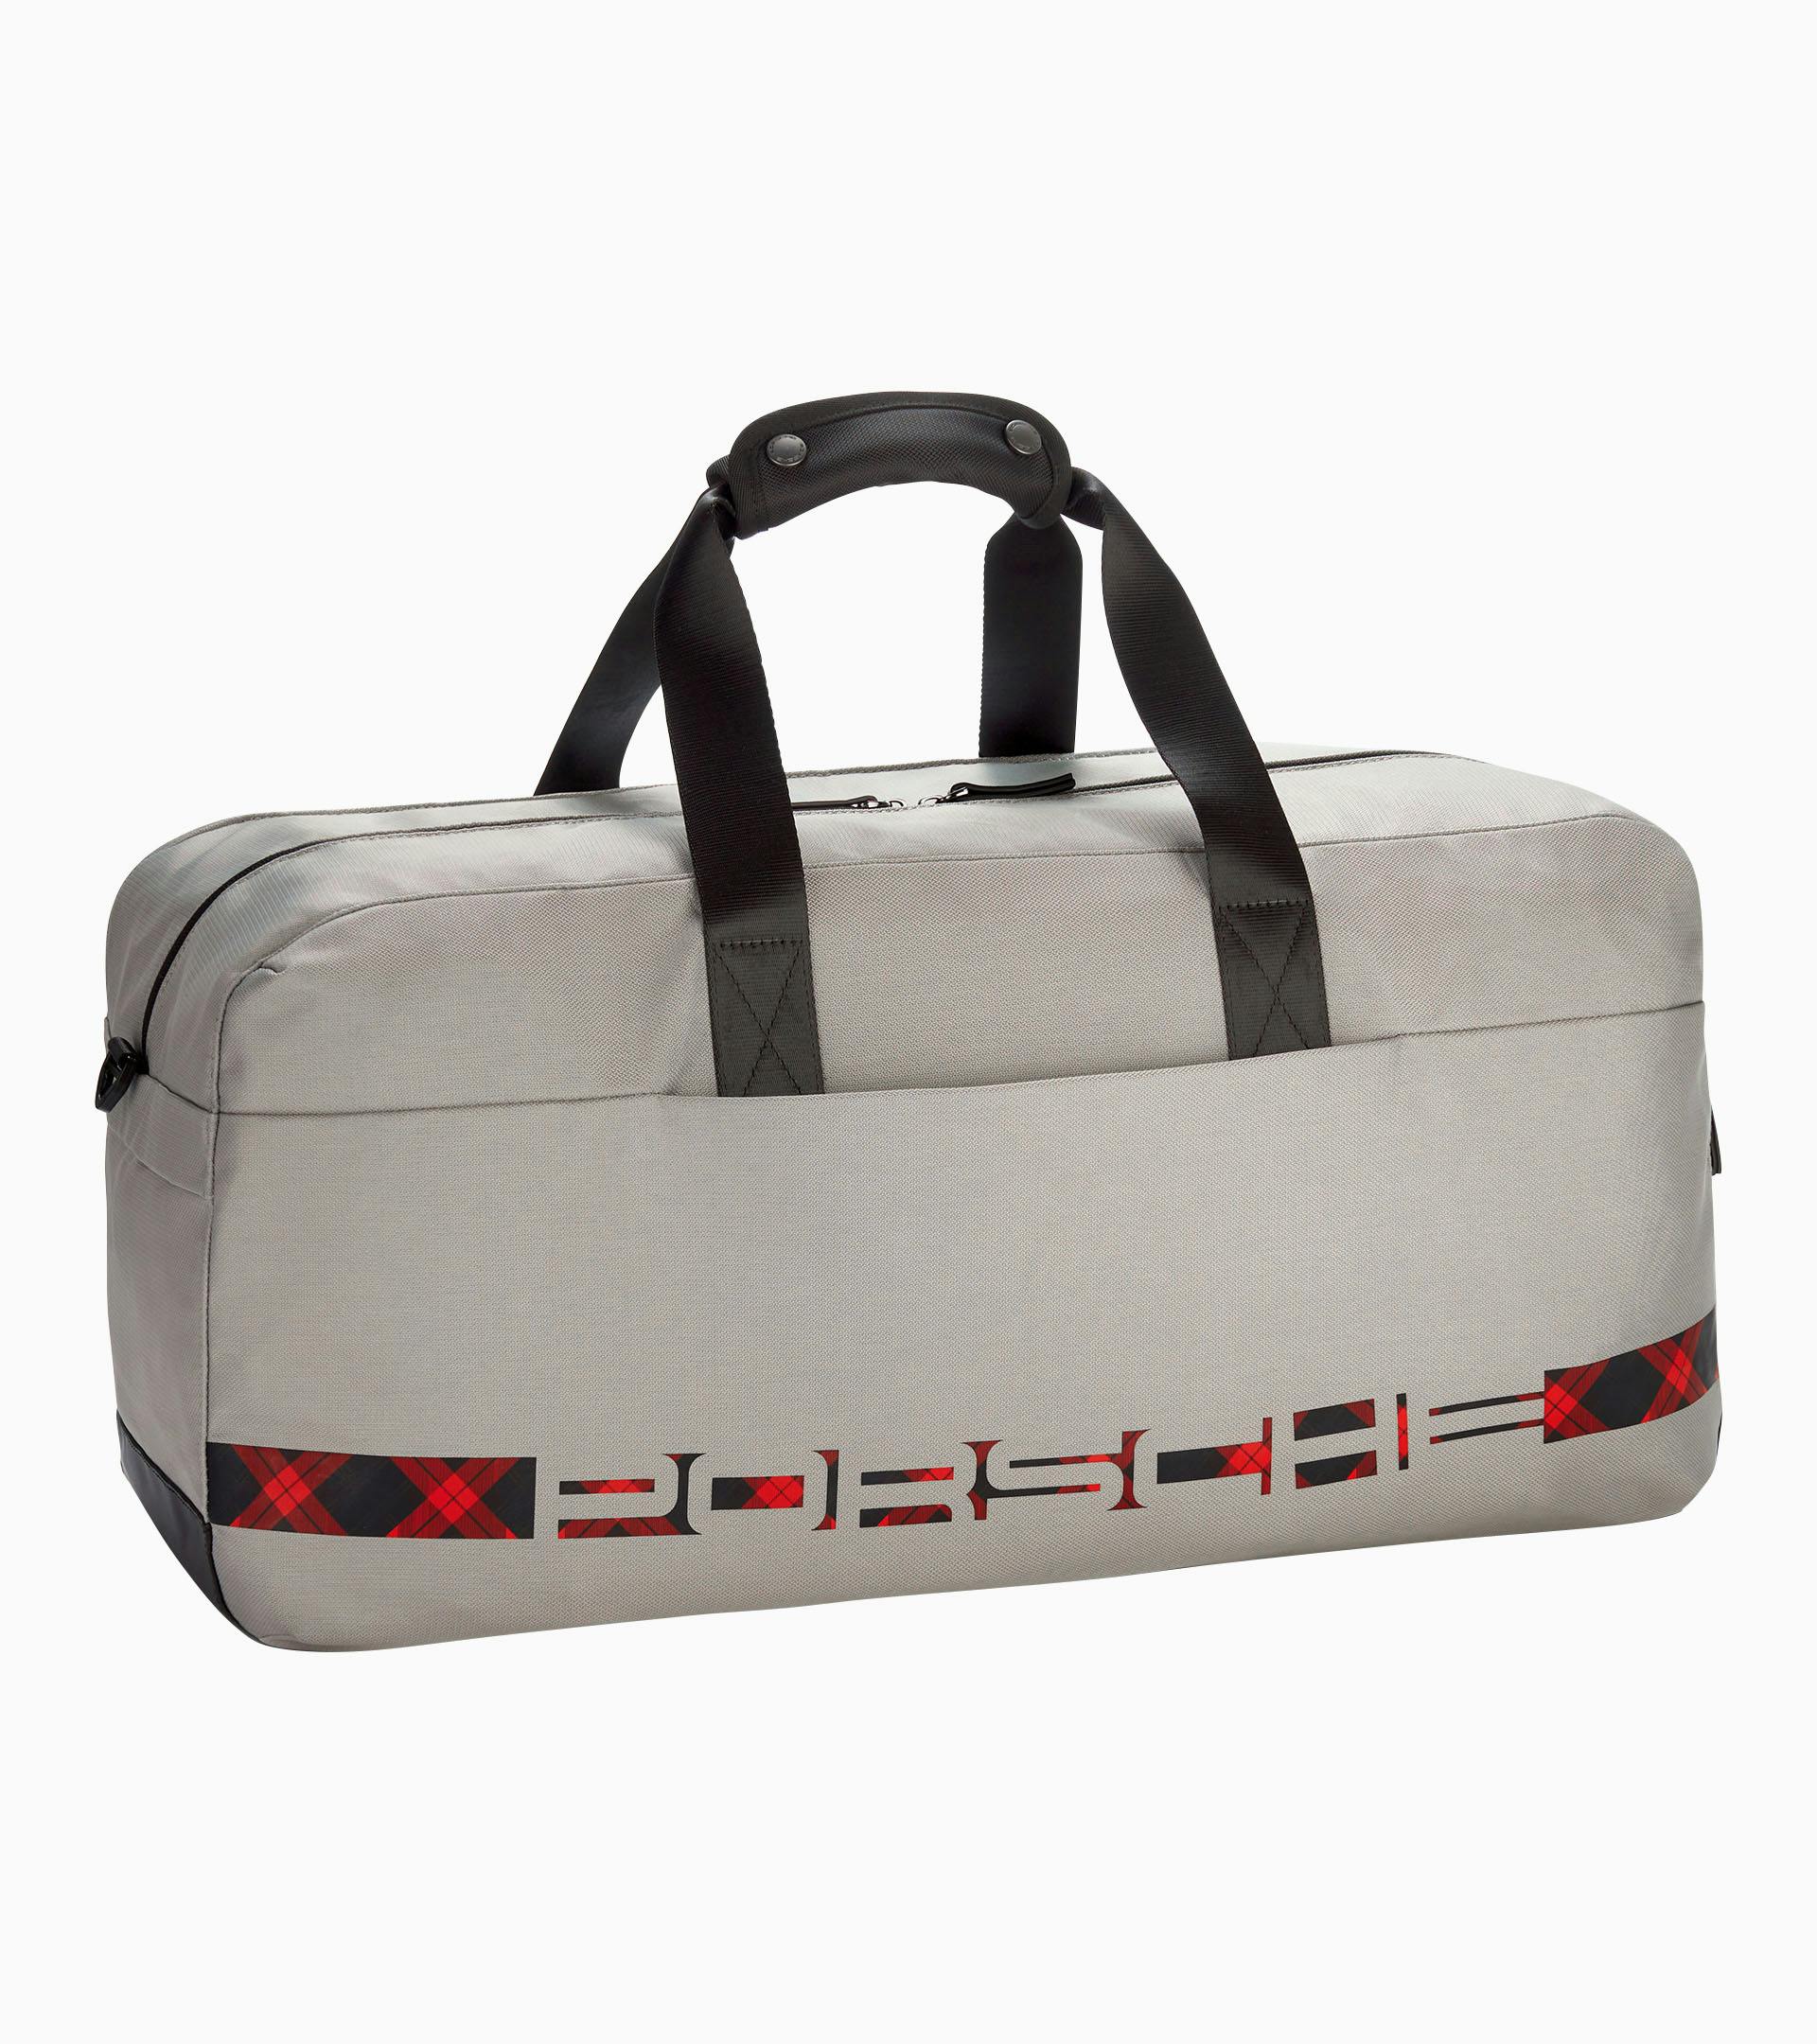 Travel bag – Turbo No. 1